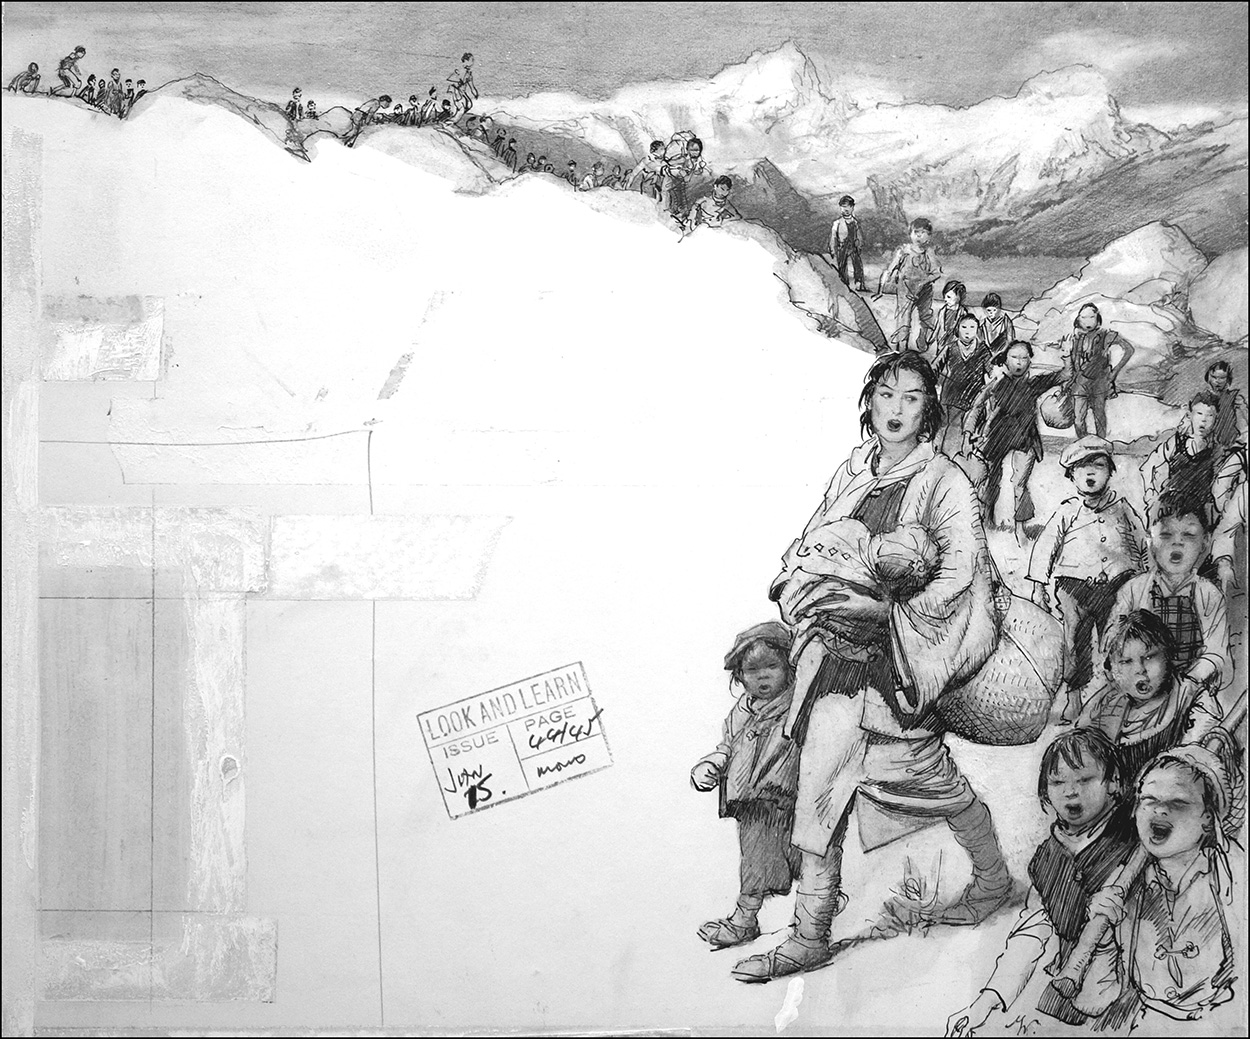 March of the Little Children (Original) (Signed) art by John Millar Watt Art at The Illustration Art Gallery